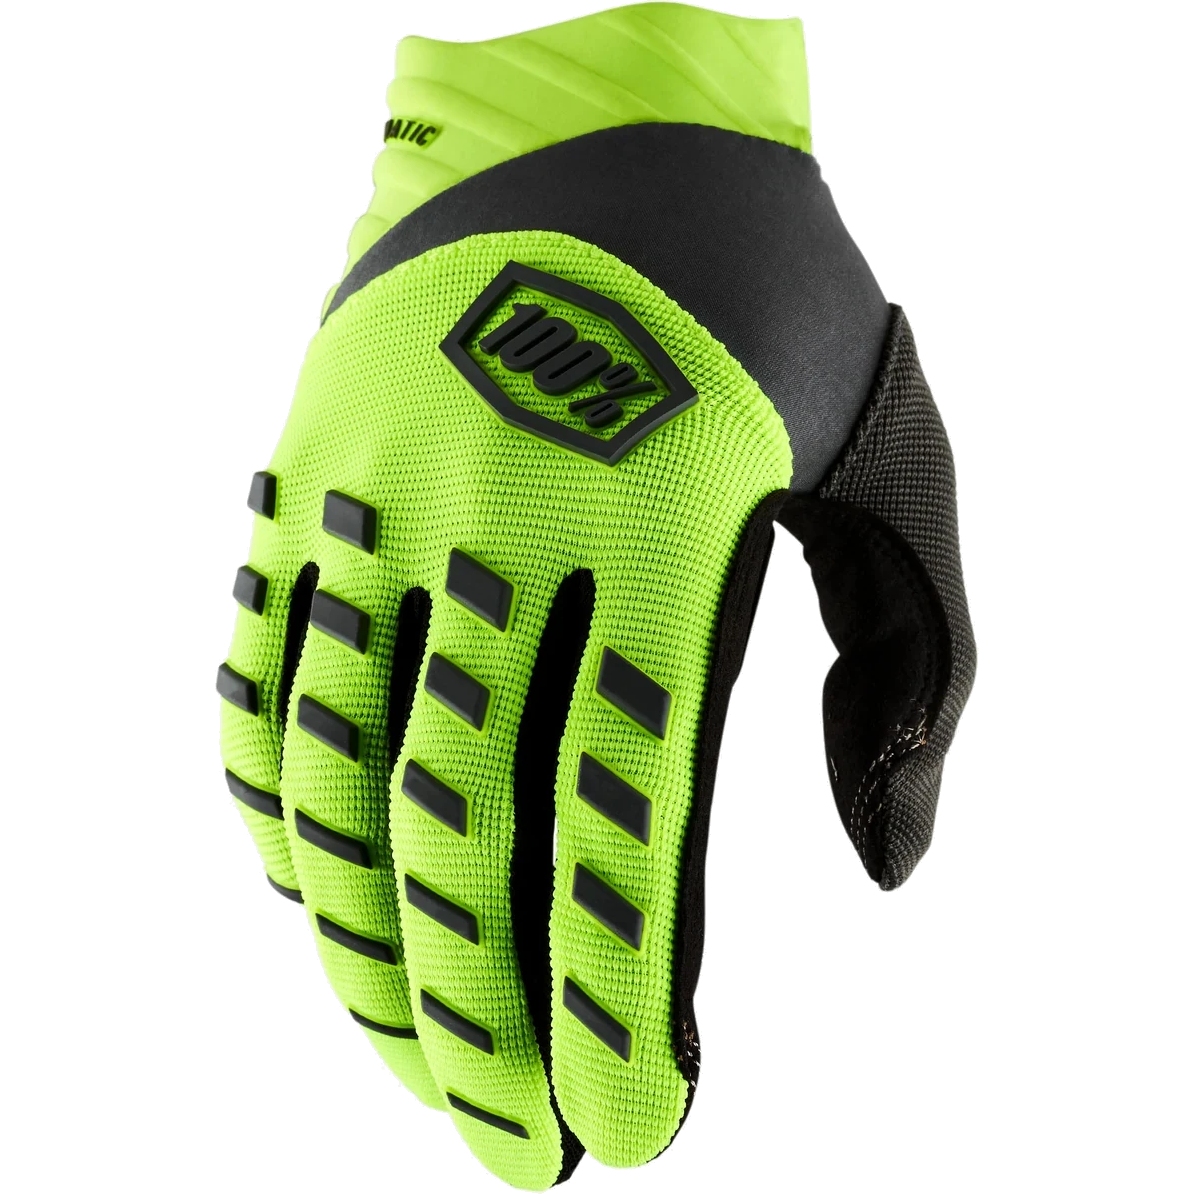 Productfoto van 100% Airmatic Bike Gloves - fluo yellow